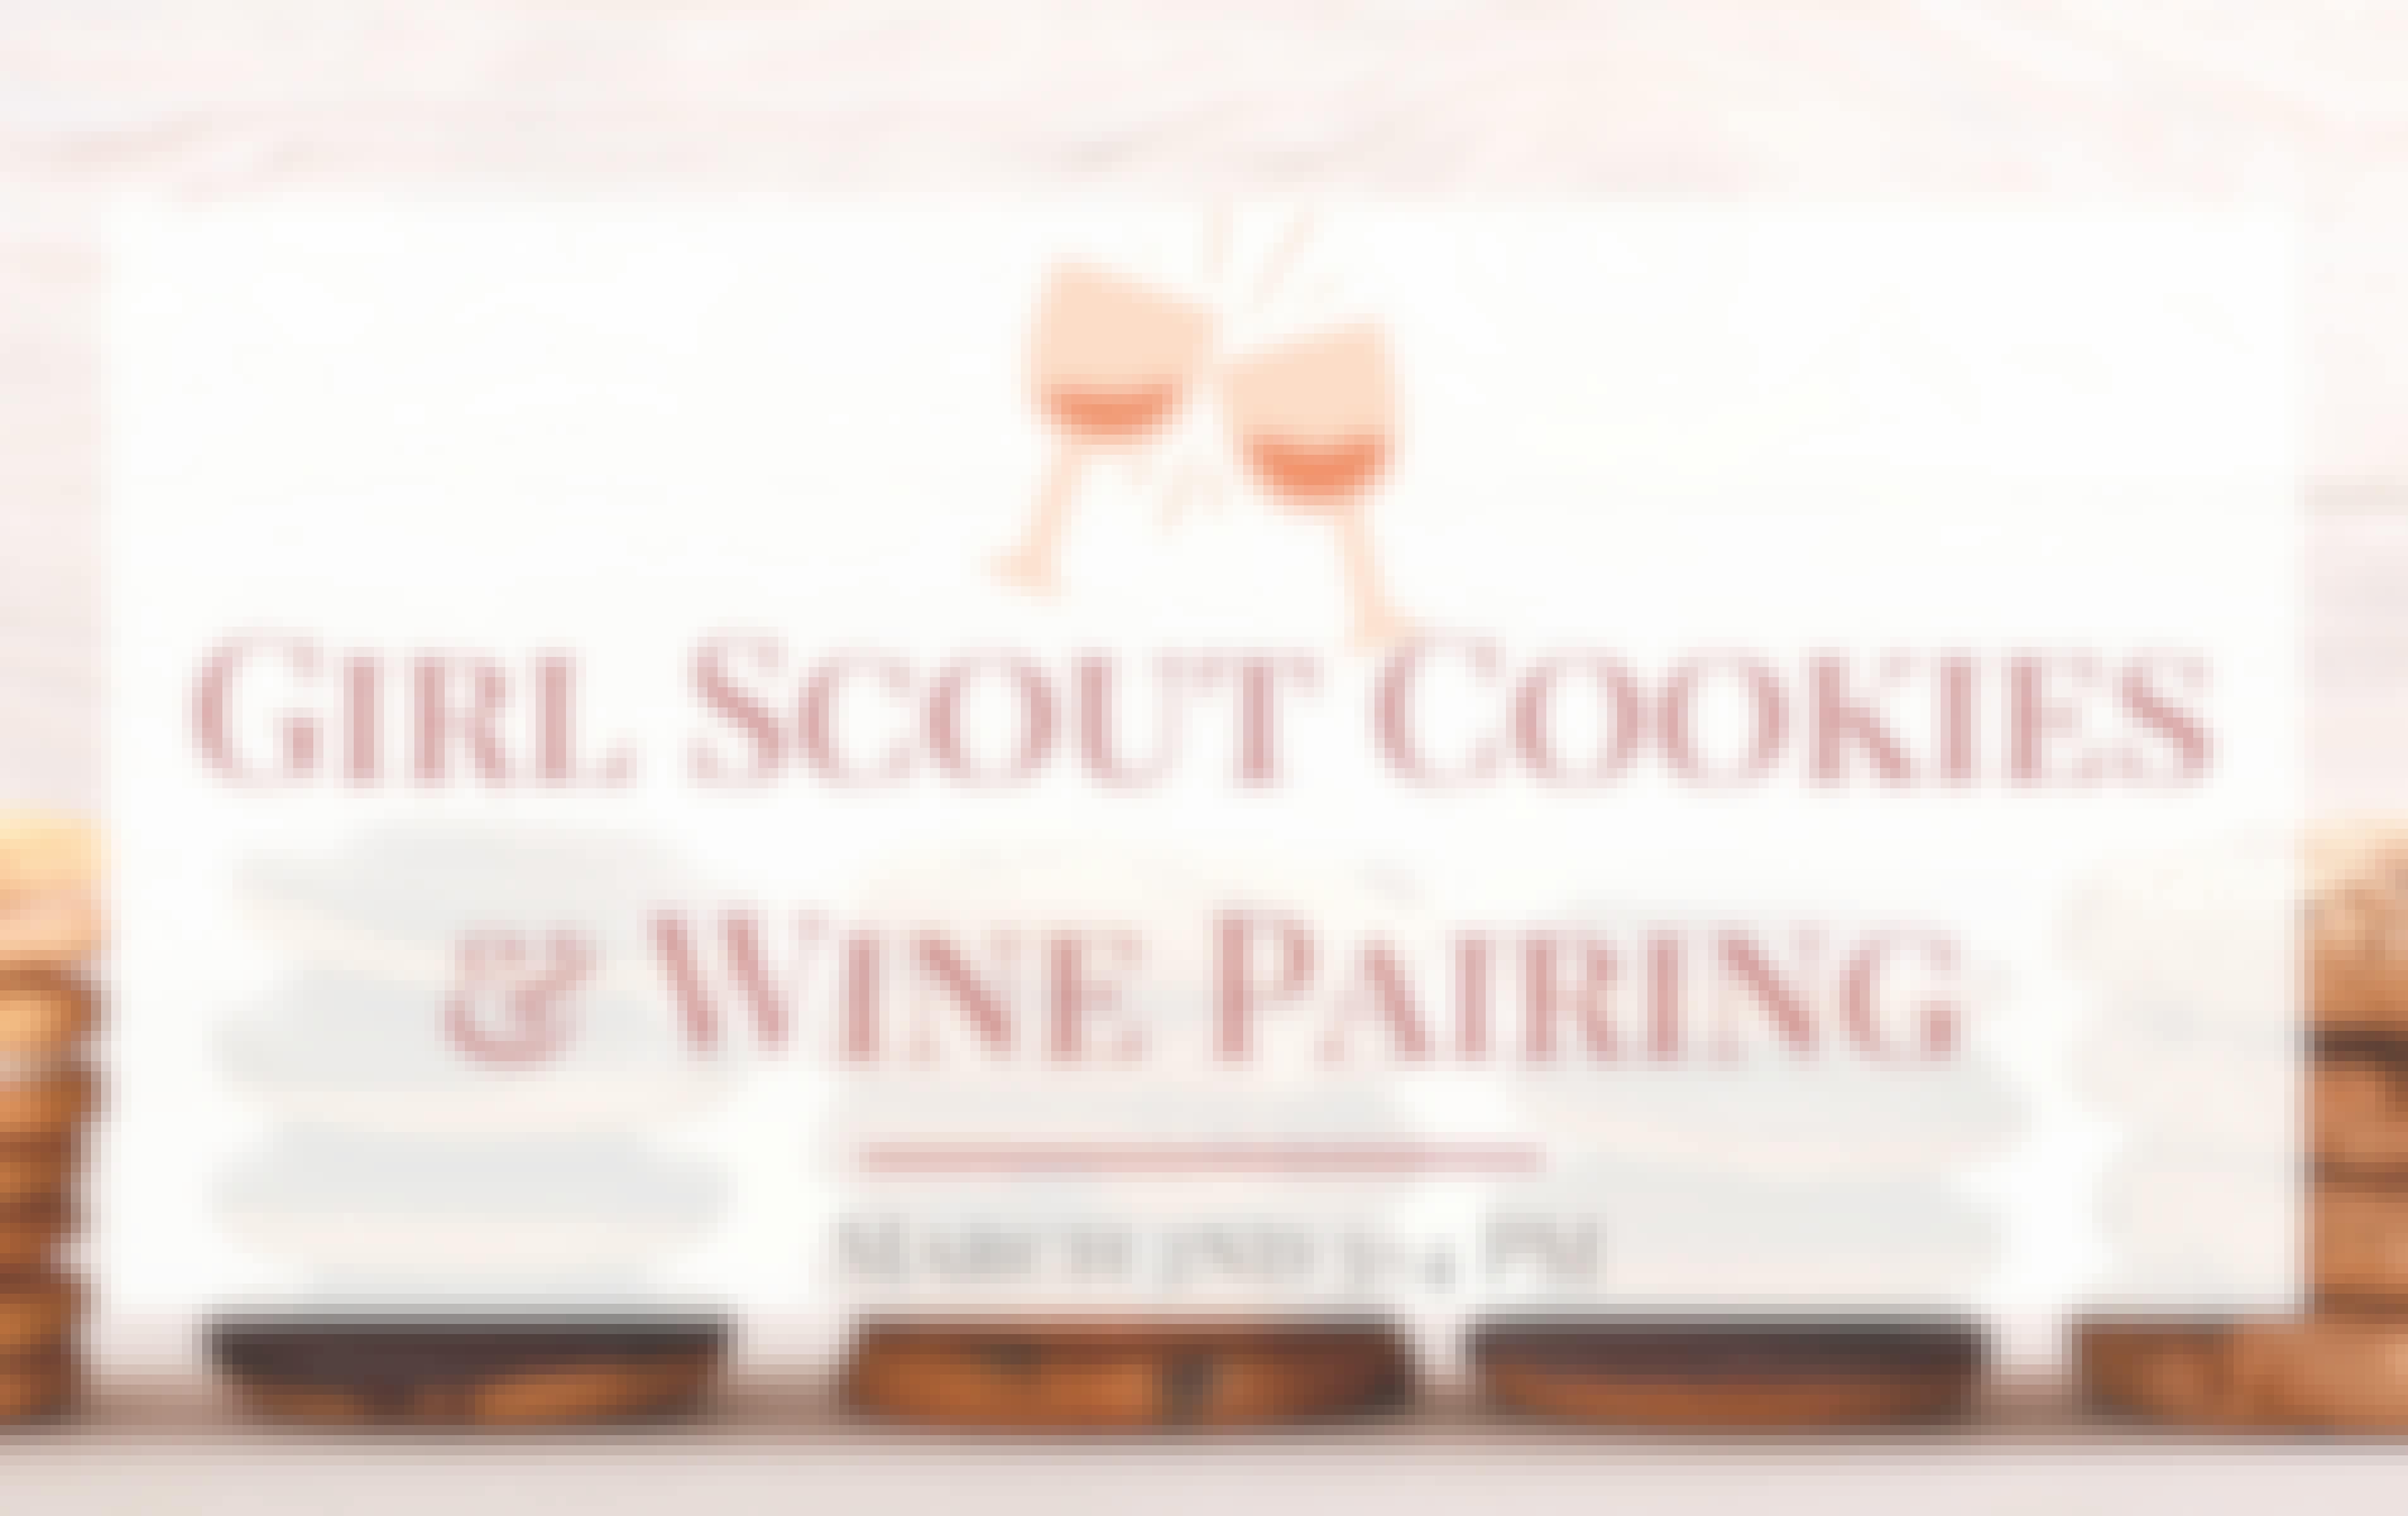 Girl Scout Cookies & Wine Pairing